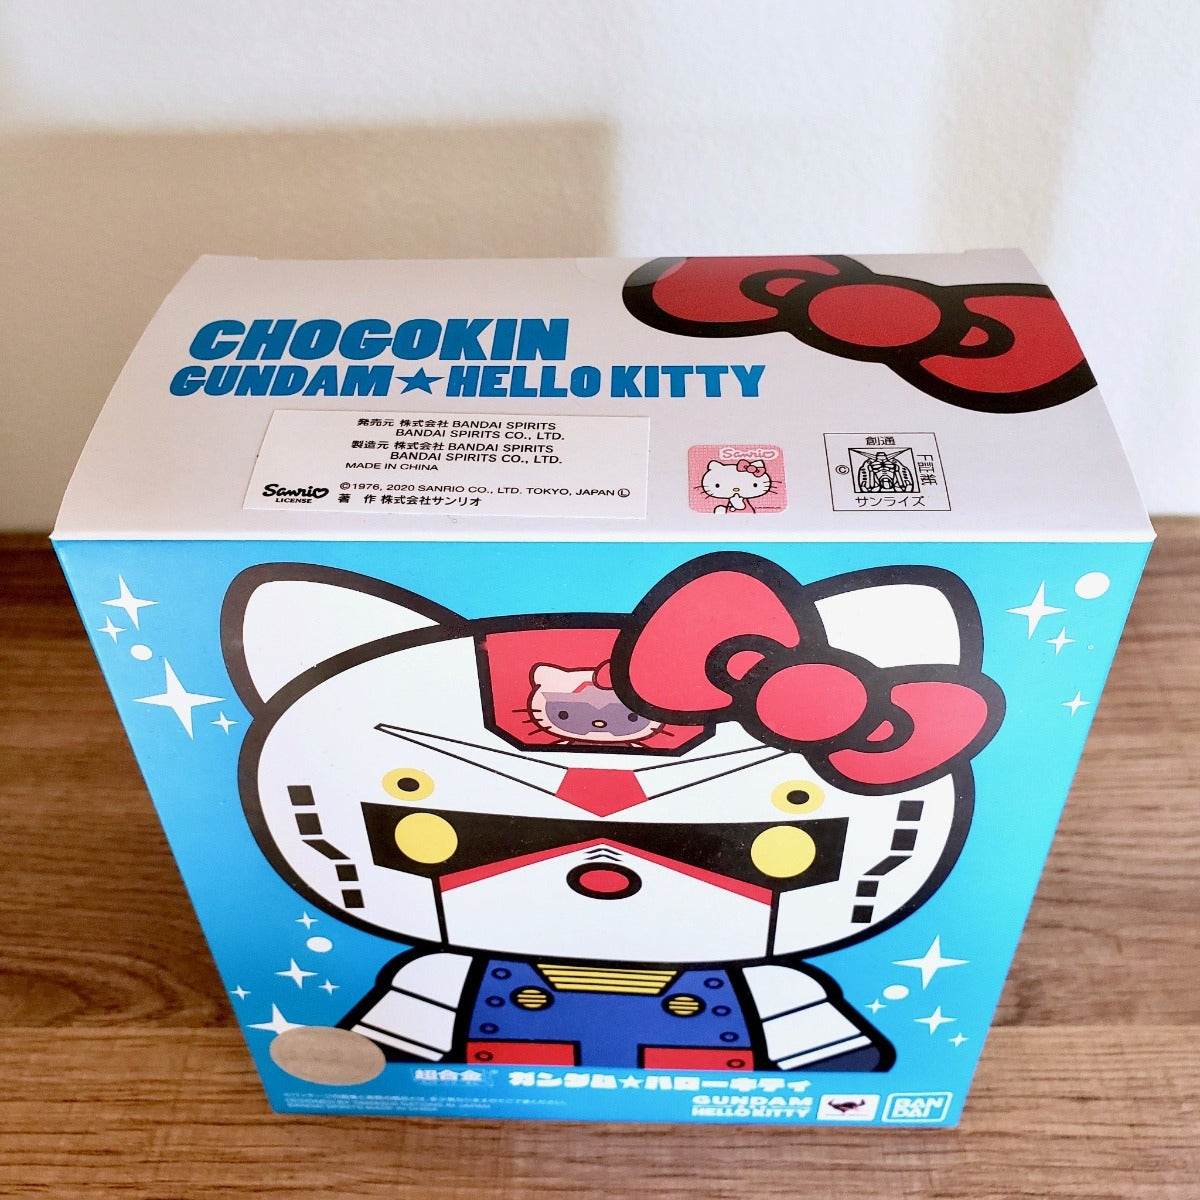 Chogokin Gundam Hello Kitty top of box